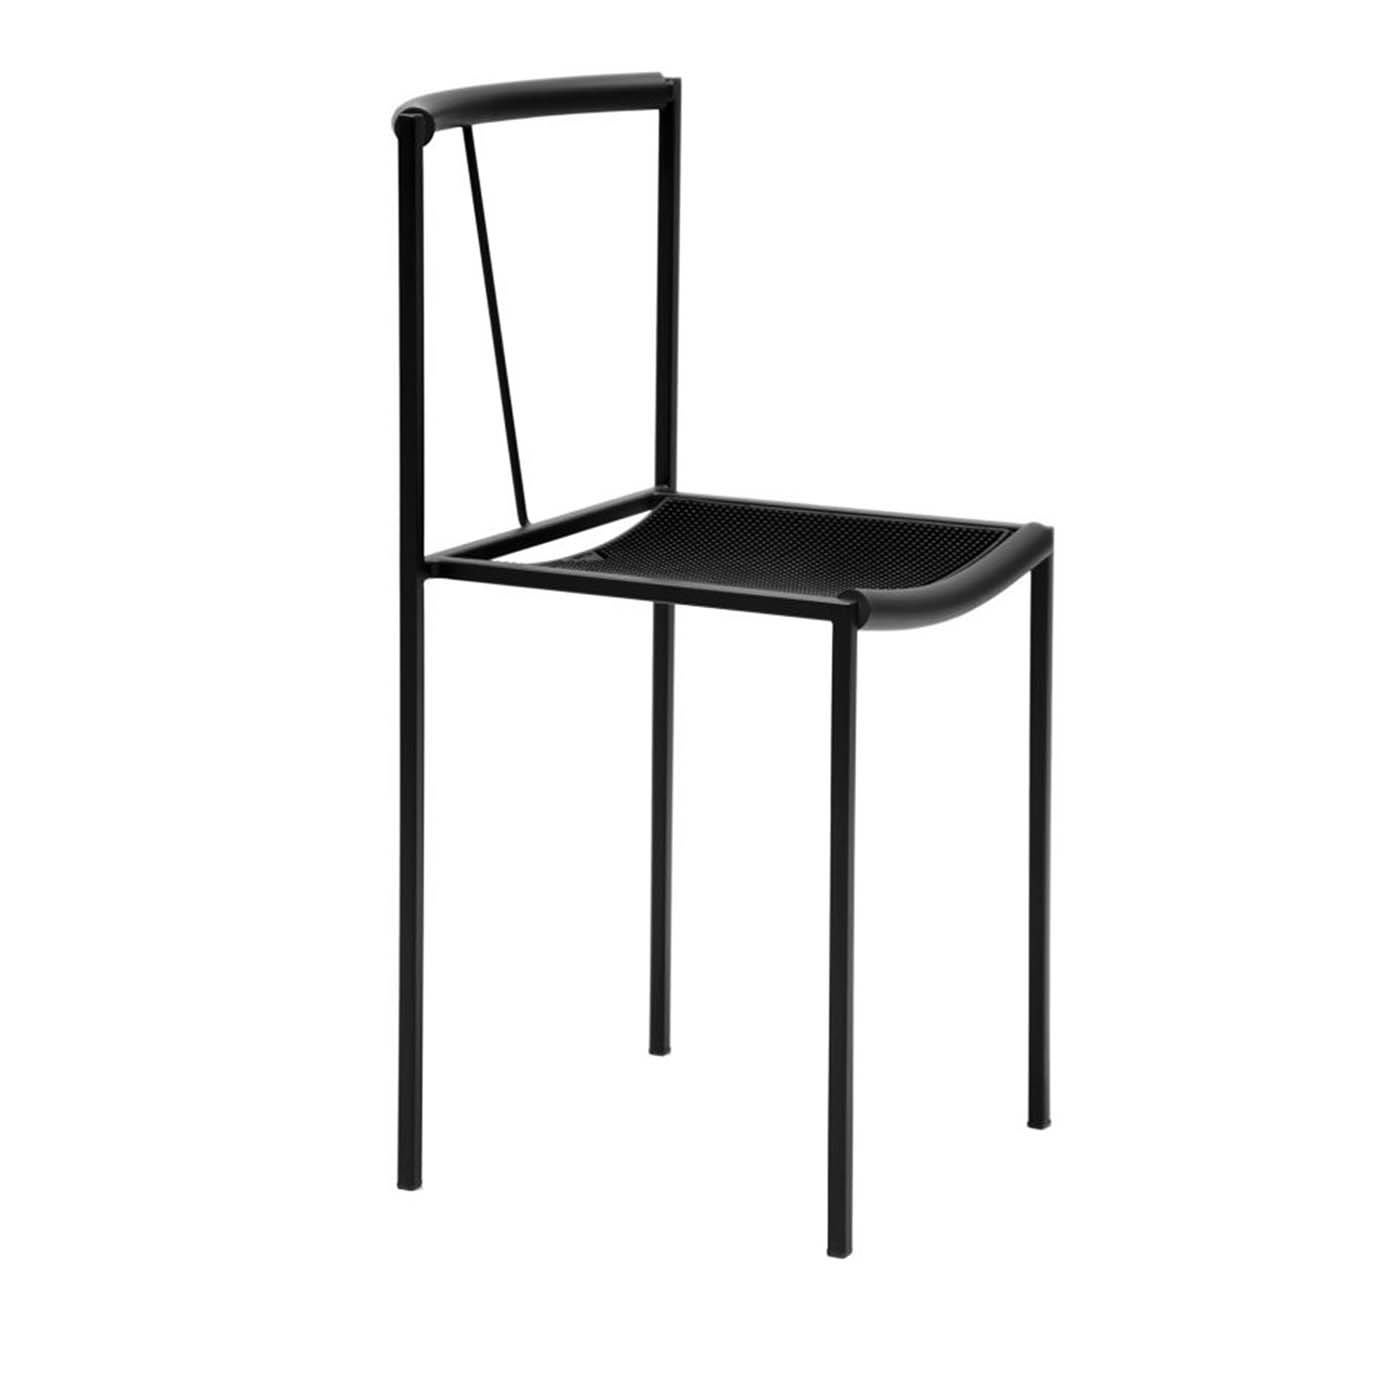 Set of 4 Sedia Chairs by Maurizio Peregalli - Zeus